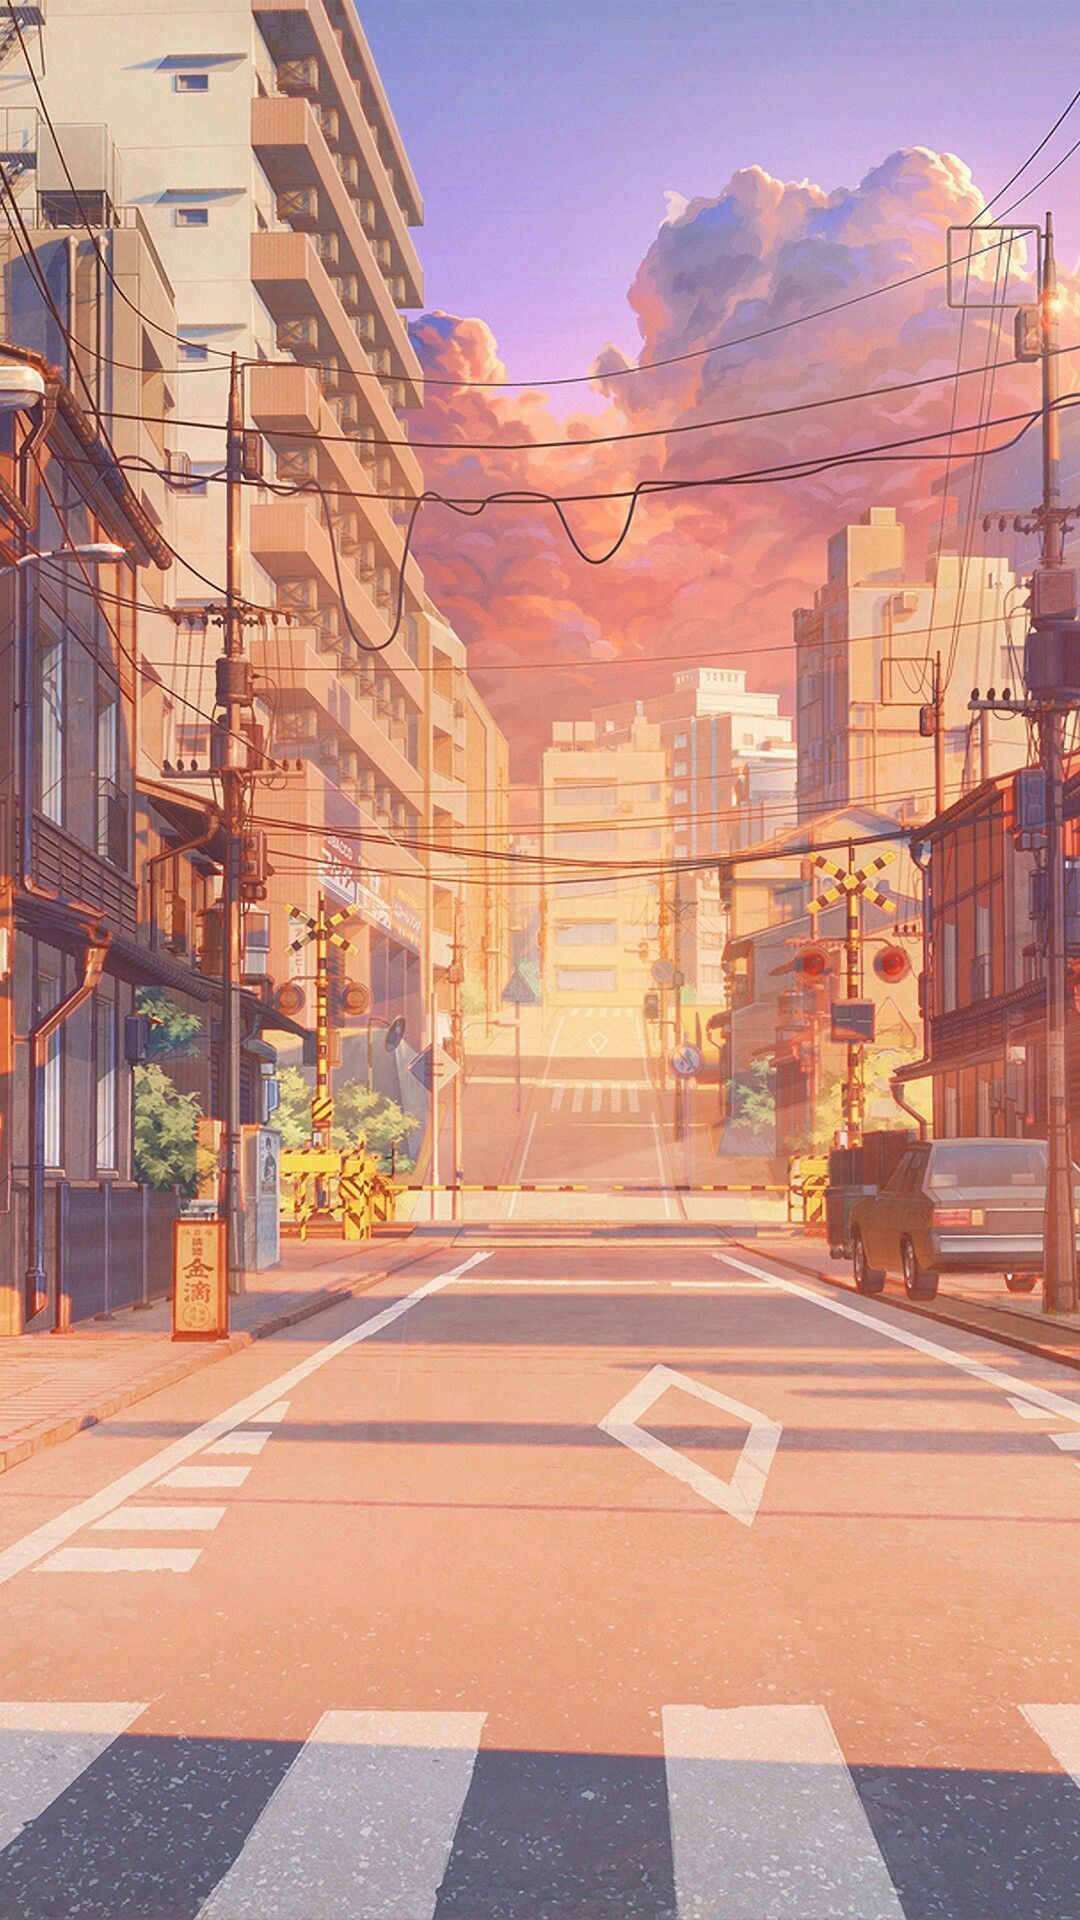 Japanese Anime Aesthetic Wallpaper Free Japanese Anime Aesthetic Background